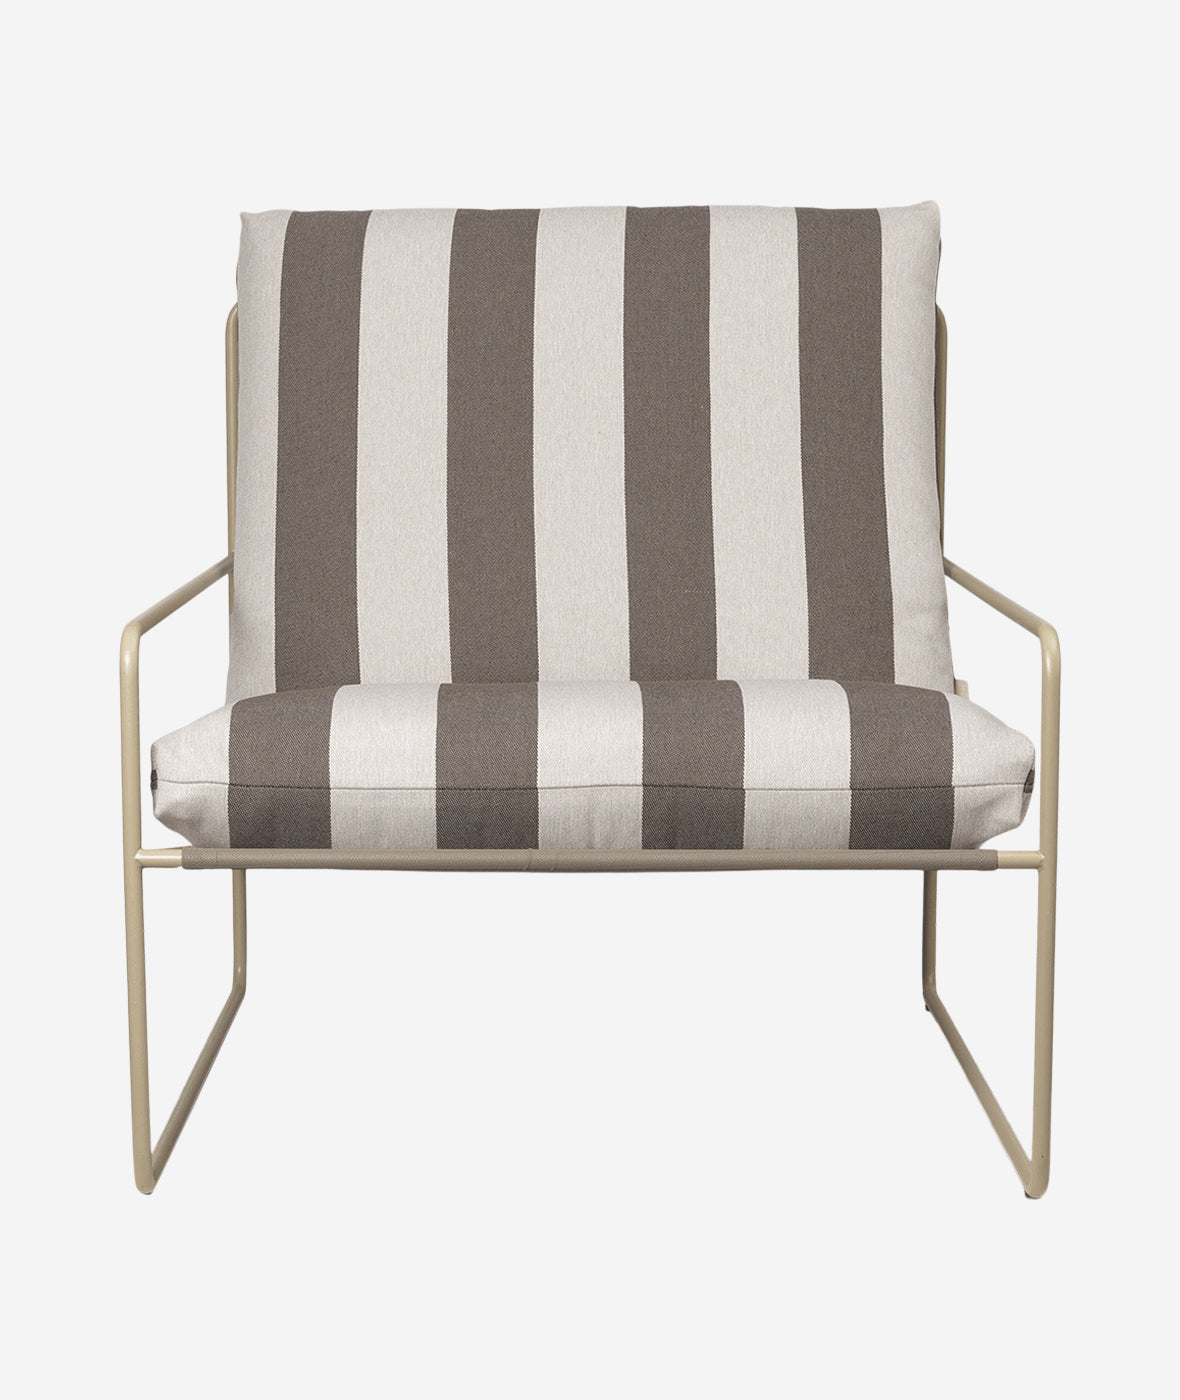 Desert Chair - More Options